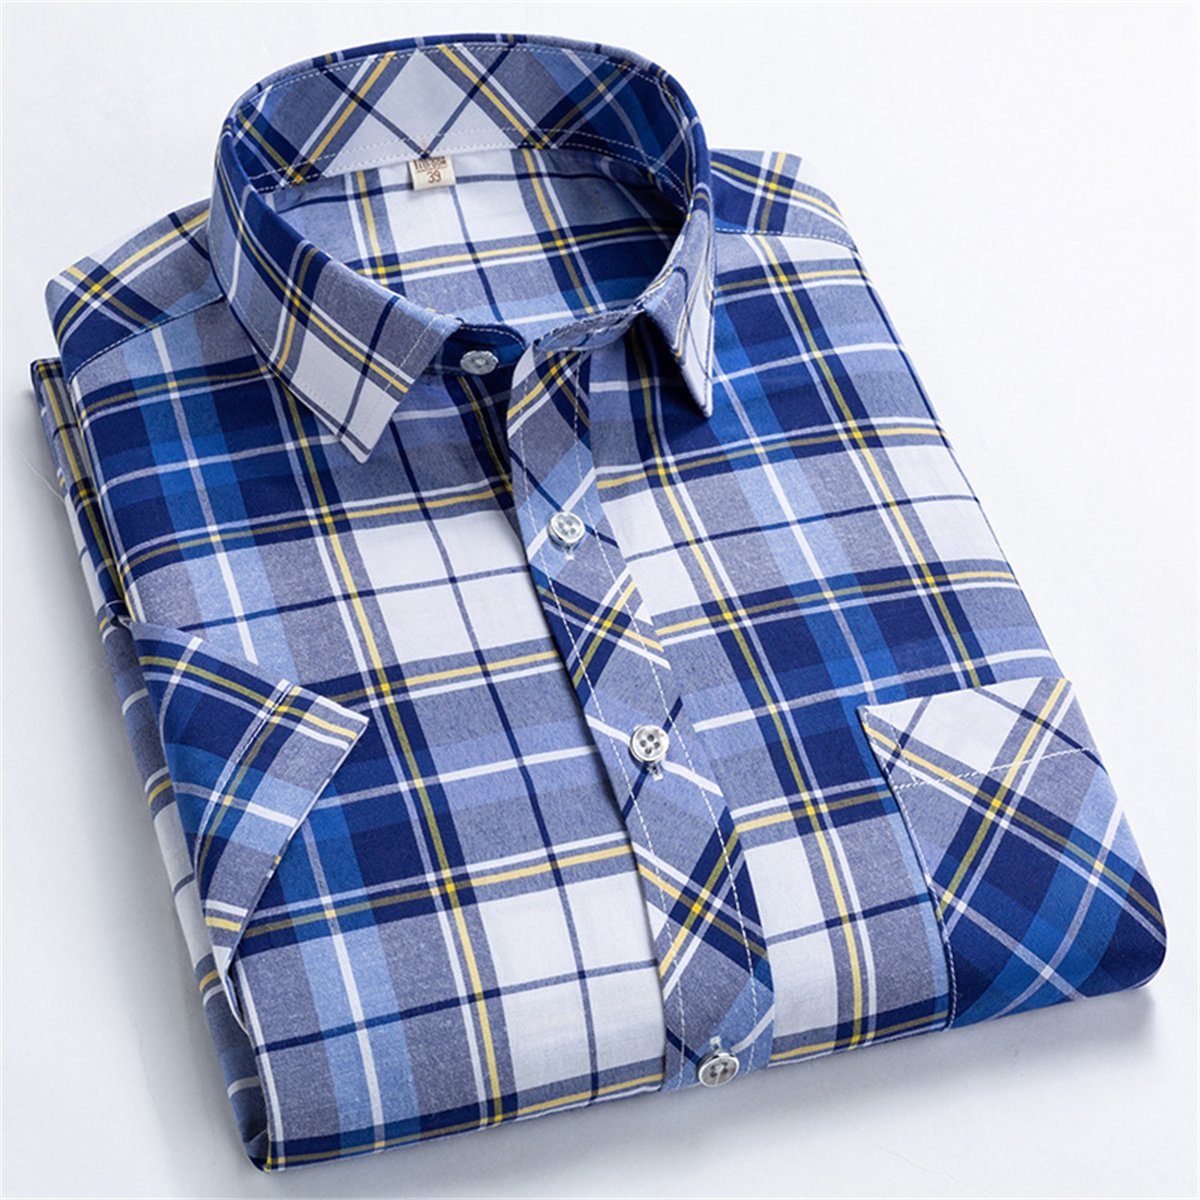 Discaver Trachtenhemd Herrenhemd, reguläre Passform, kurzärmlig, lässiges Popeline-Hemd Dunkelblau